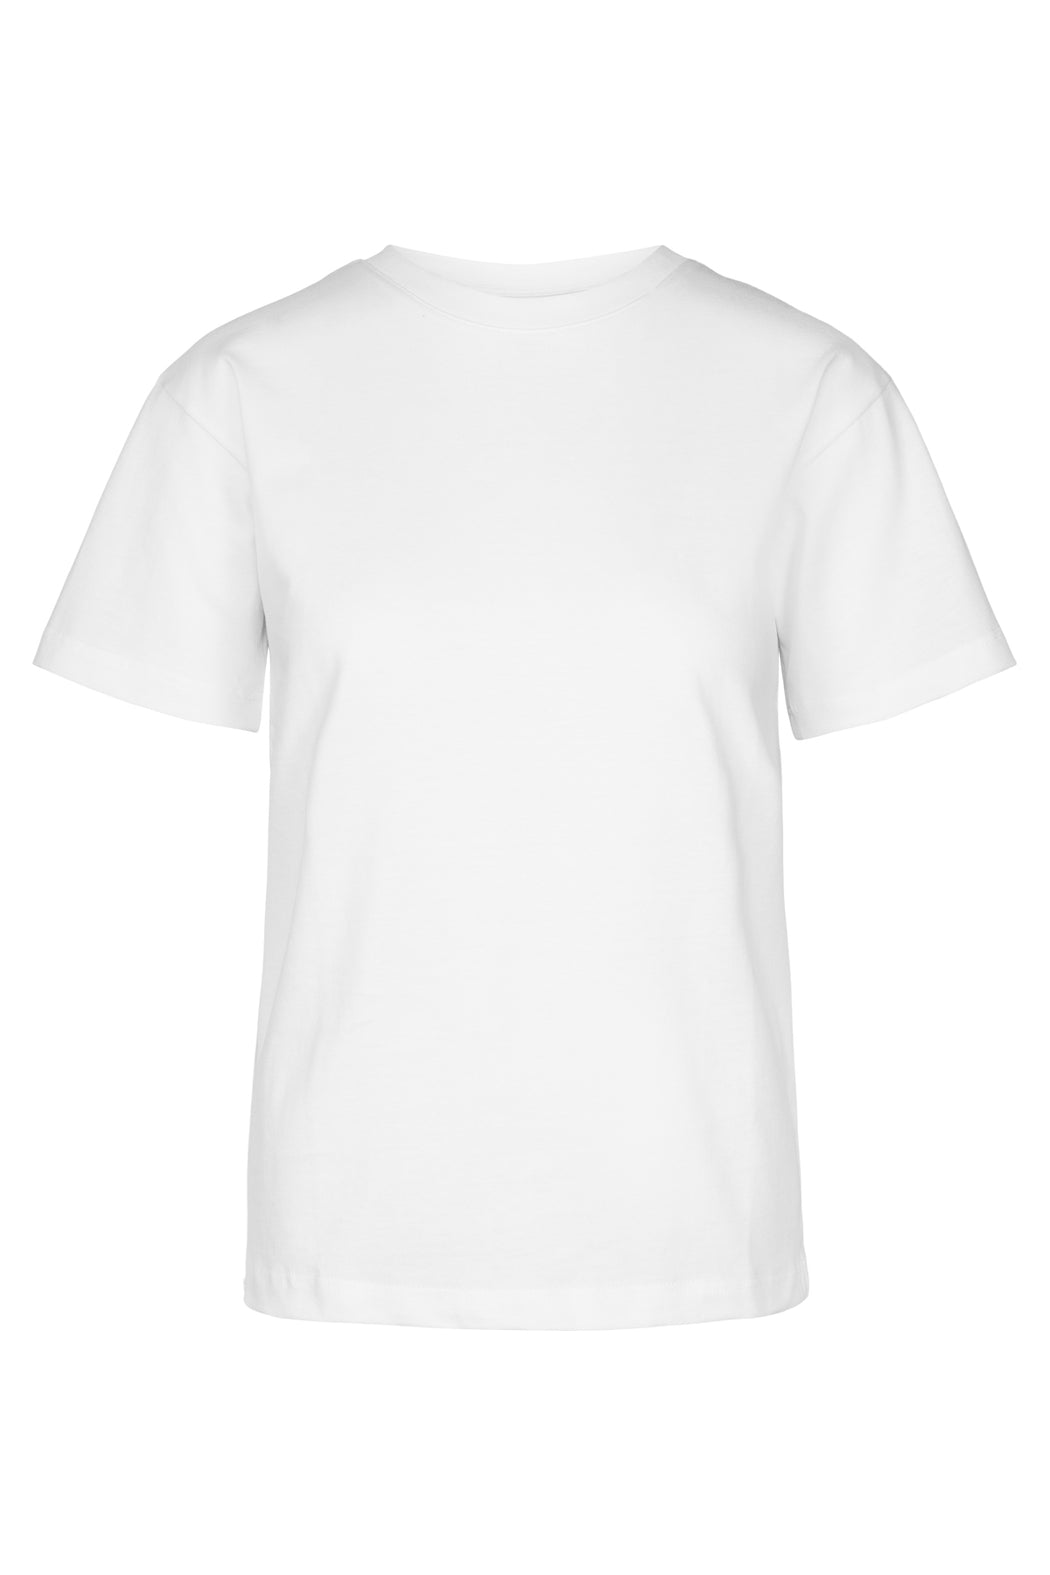 Envelope1976 Isle of Wight t-shirt - Organic cotton T-shirt White